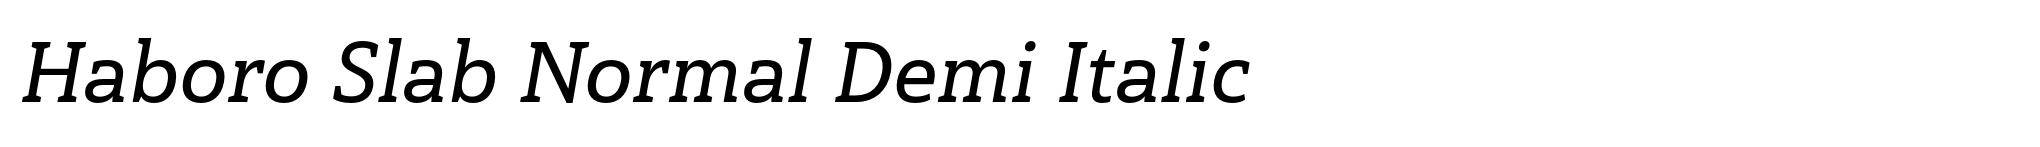 Haboro Slab Normal Demi Italic image